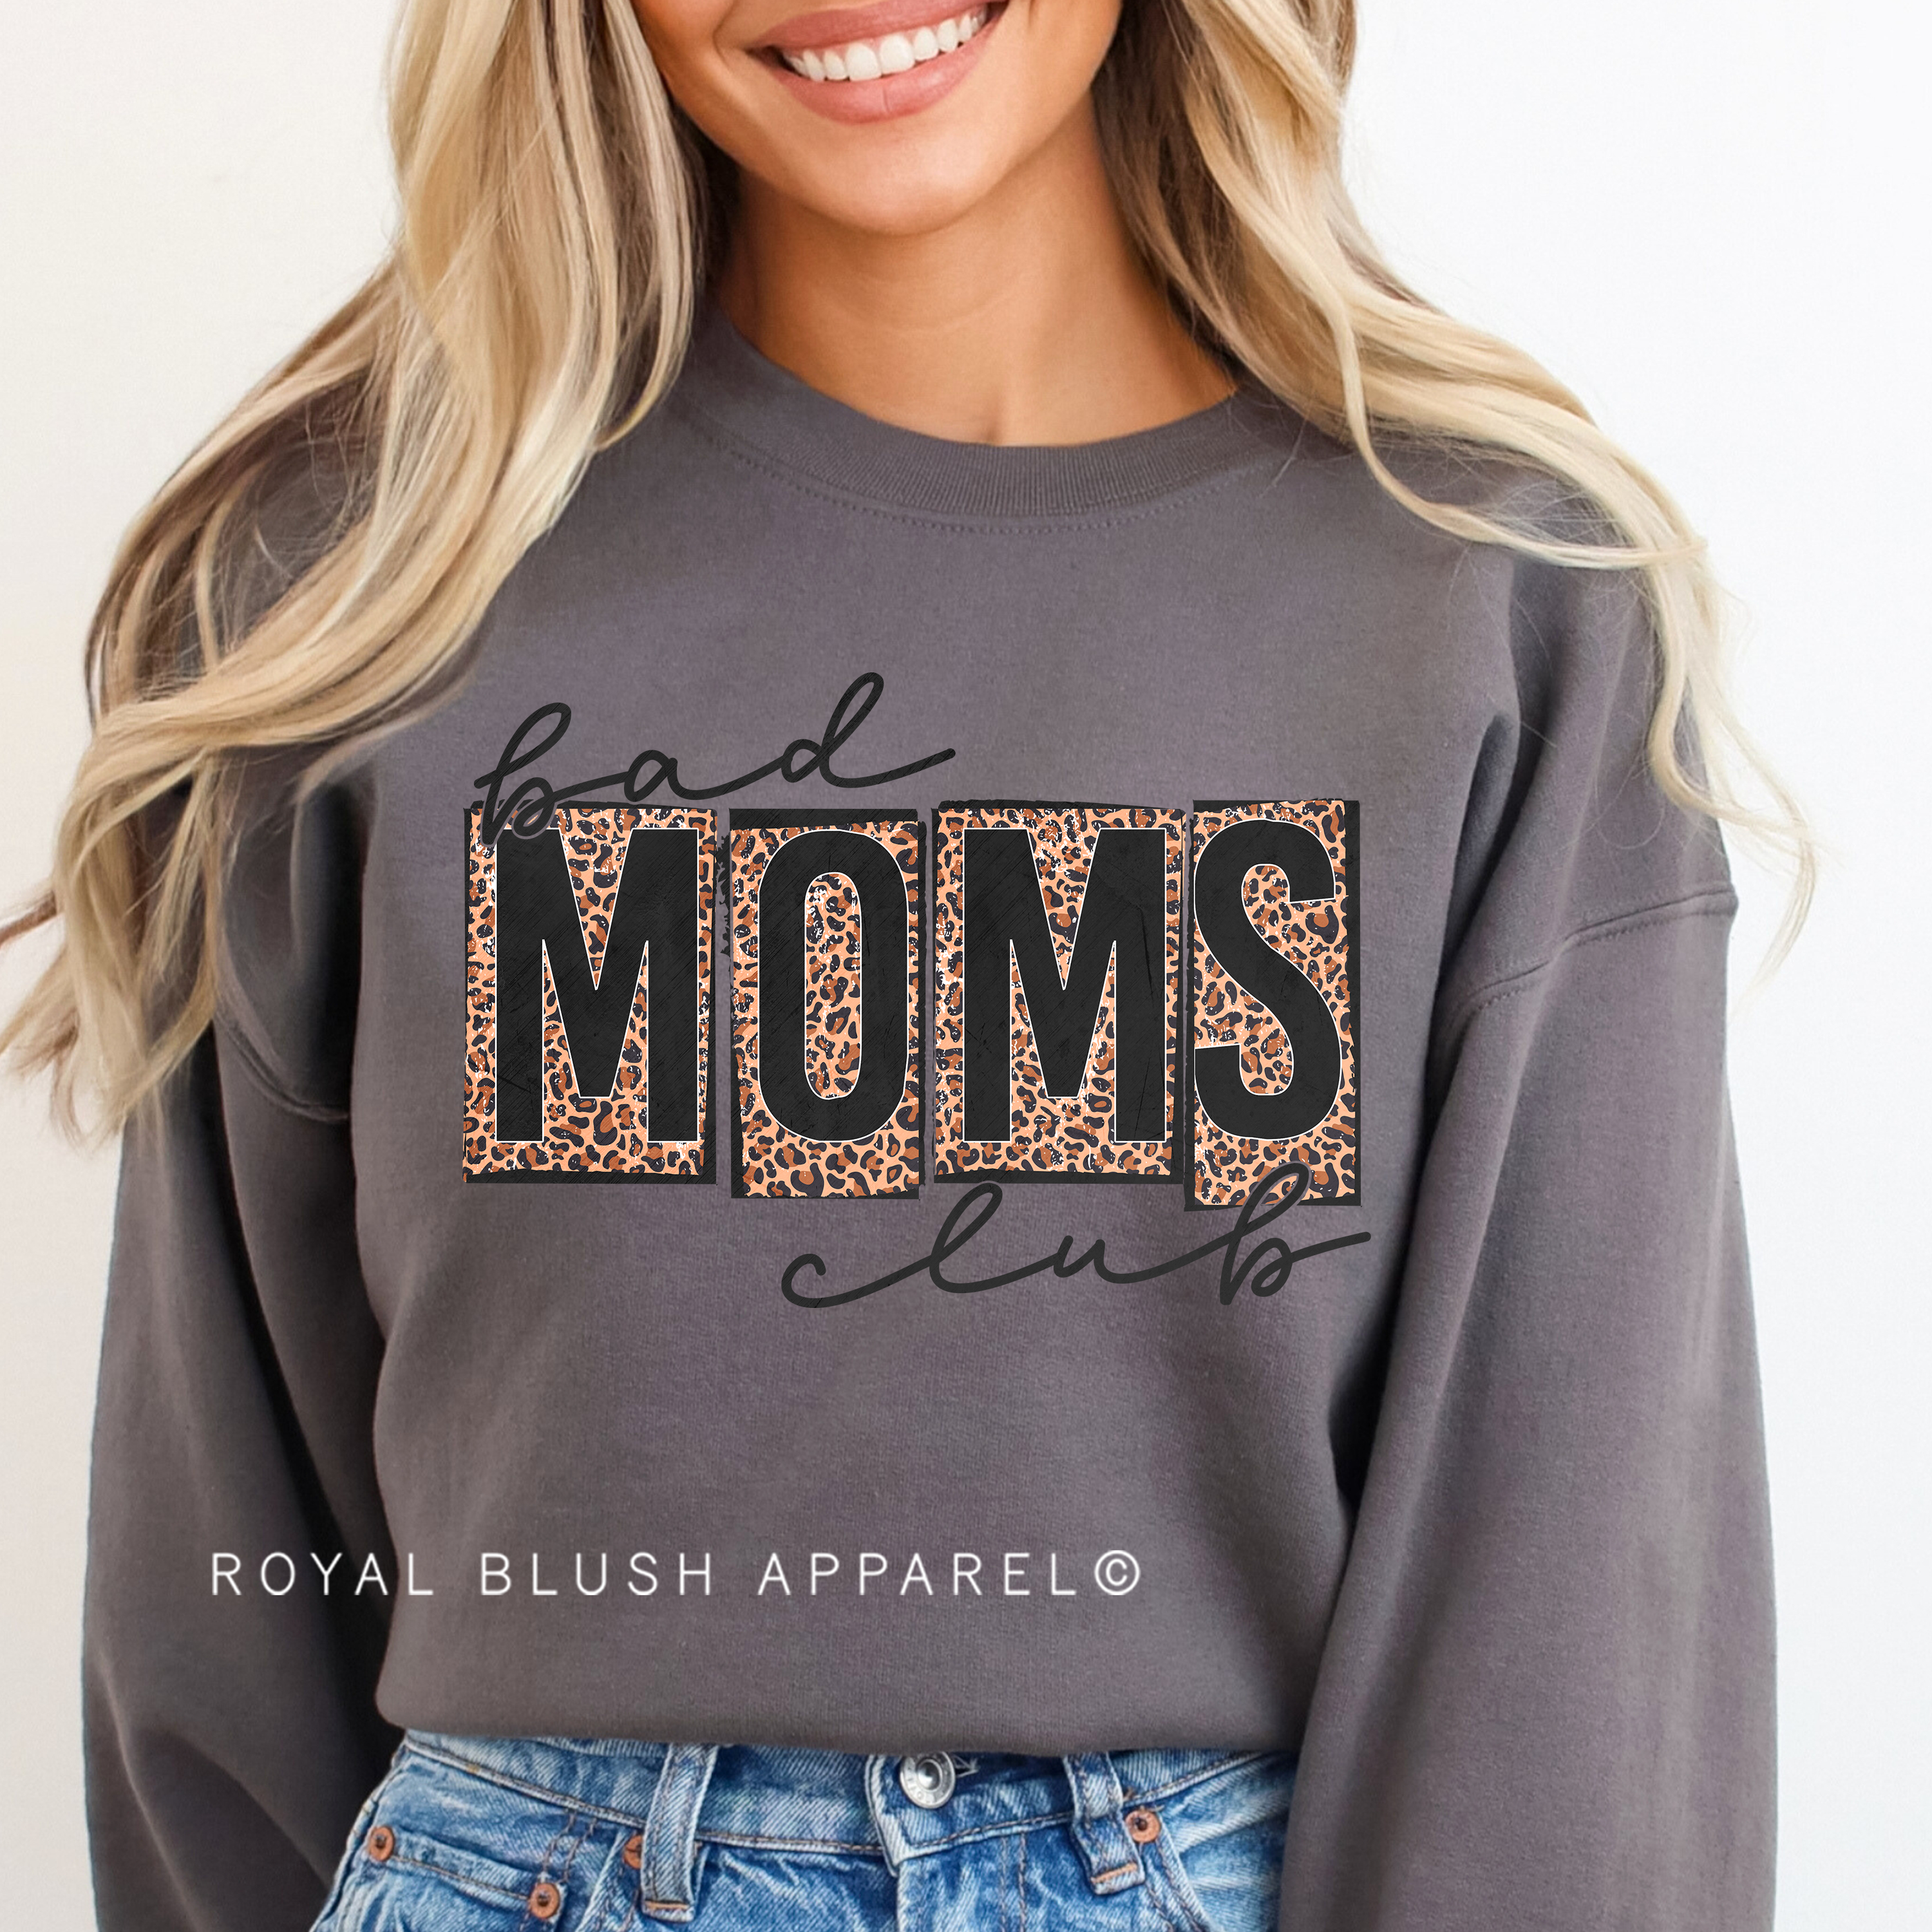 Bad Moms Club Sweatshirt